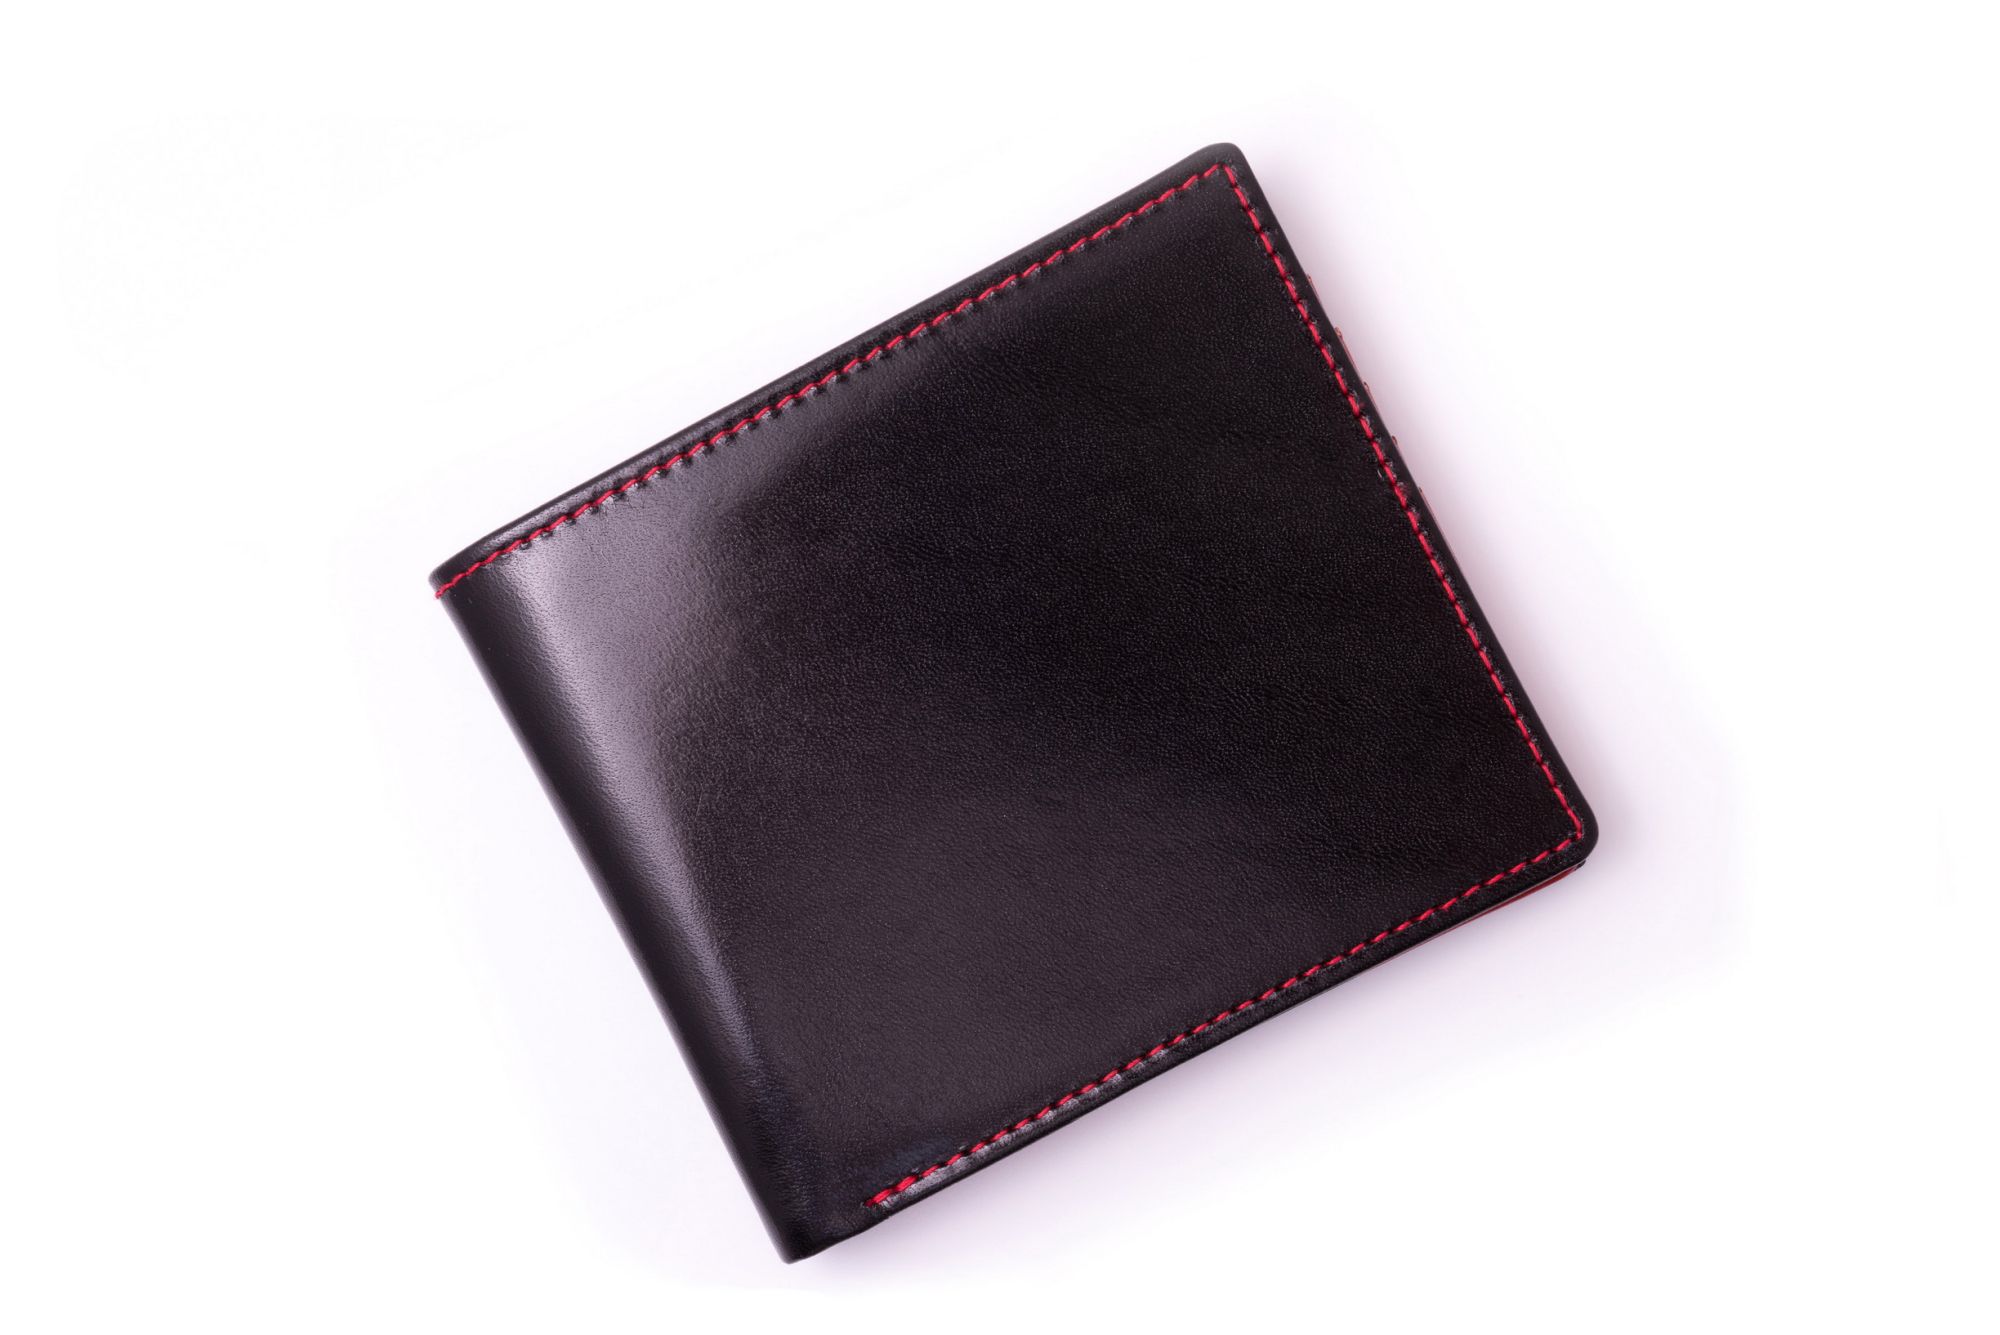 Fort Belvedere Men's Leather Wallet